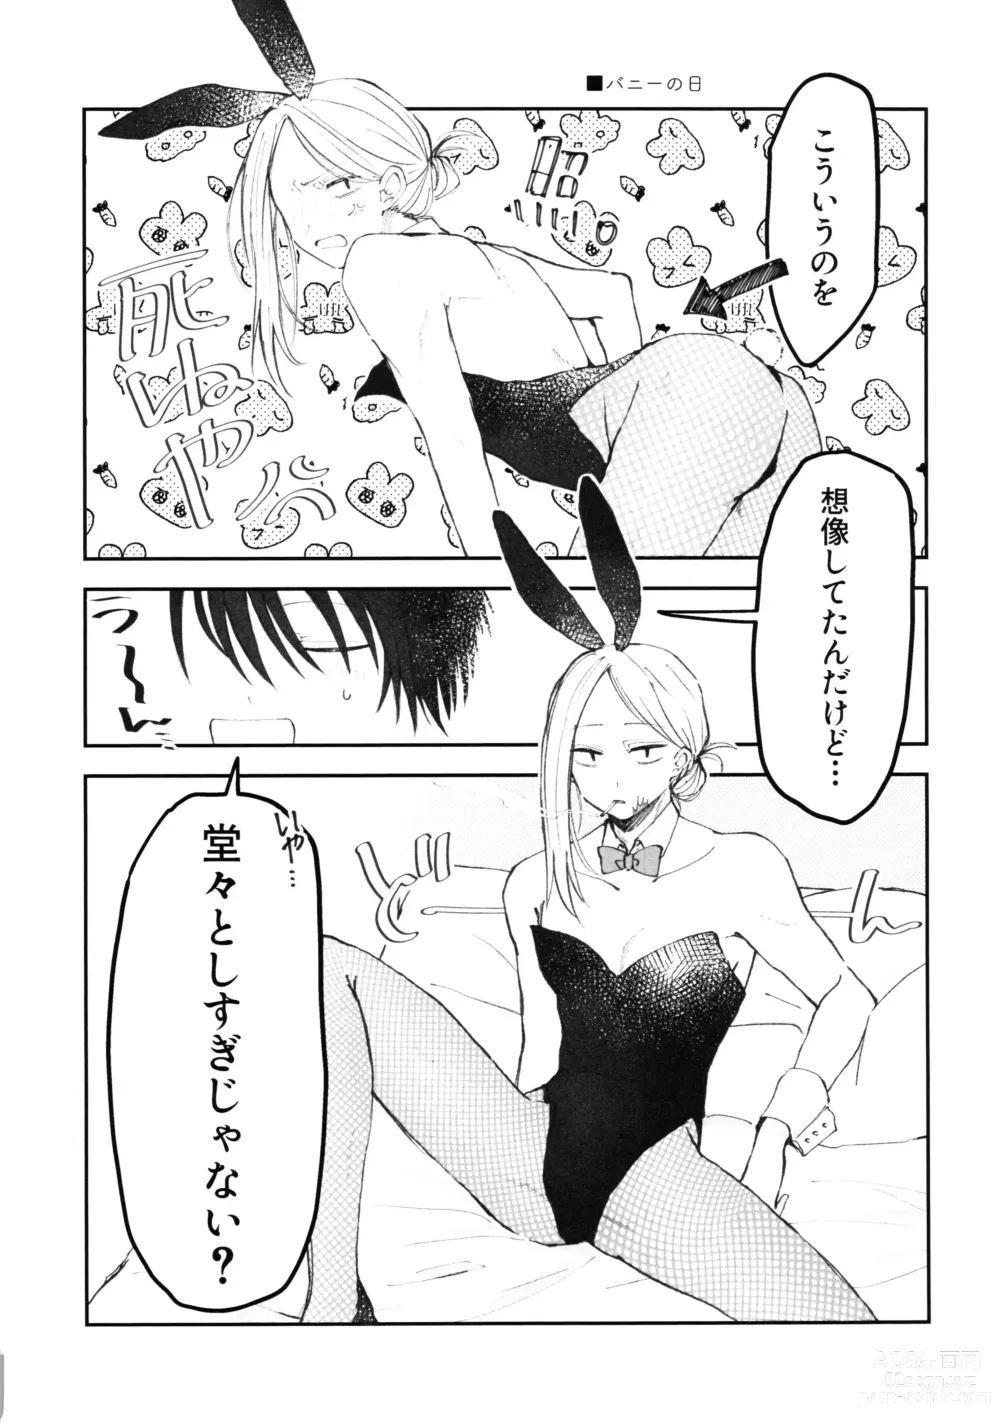 Page 24 of doujinshi NGSS LOG 1